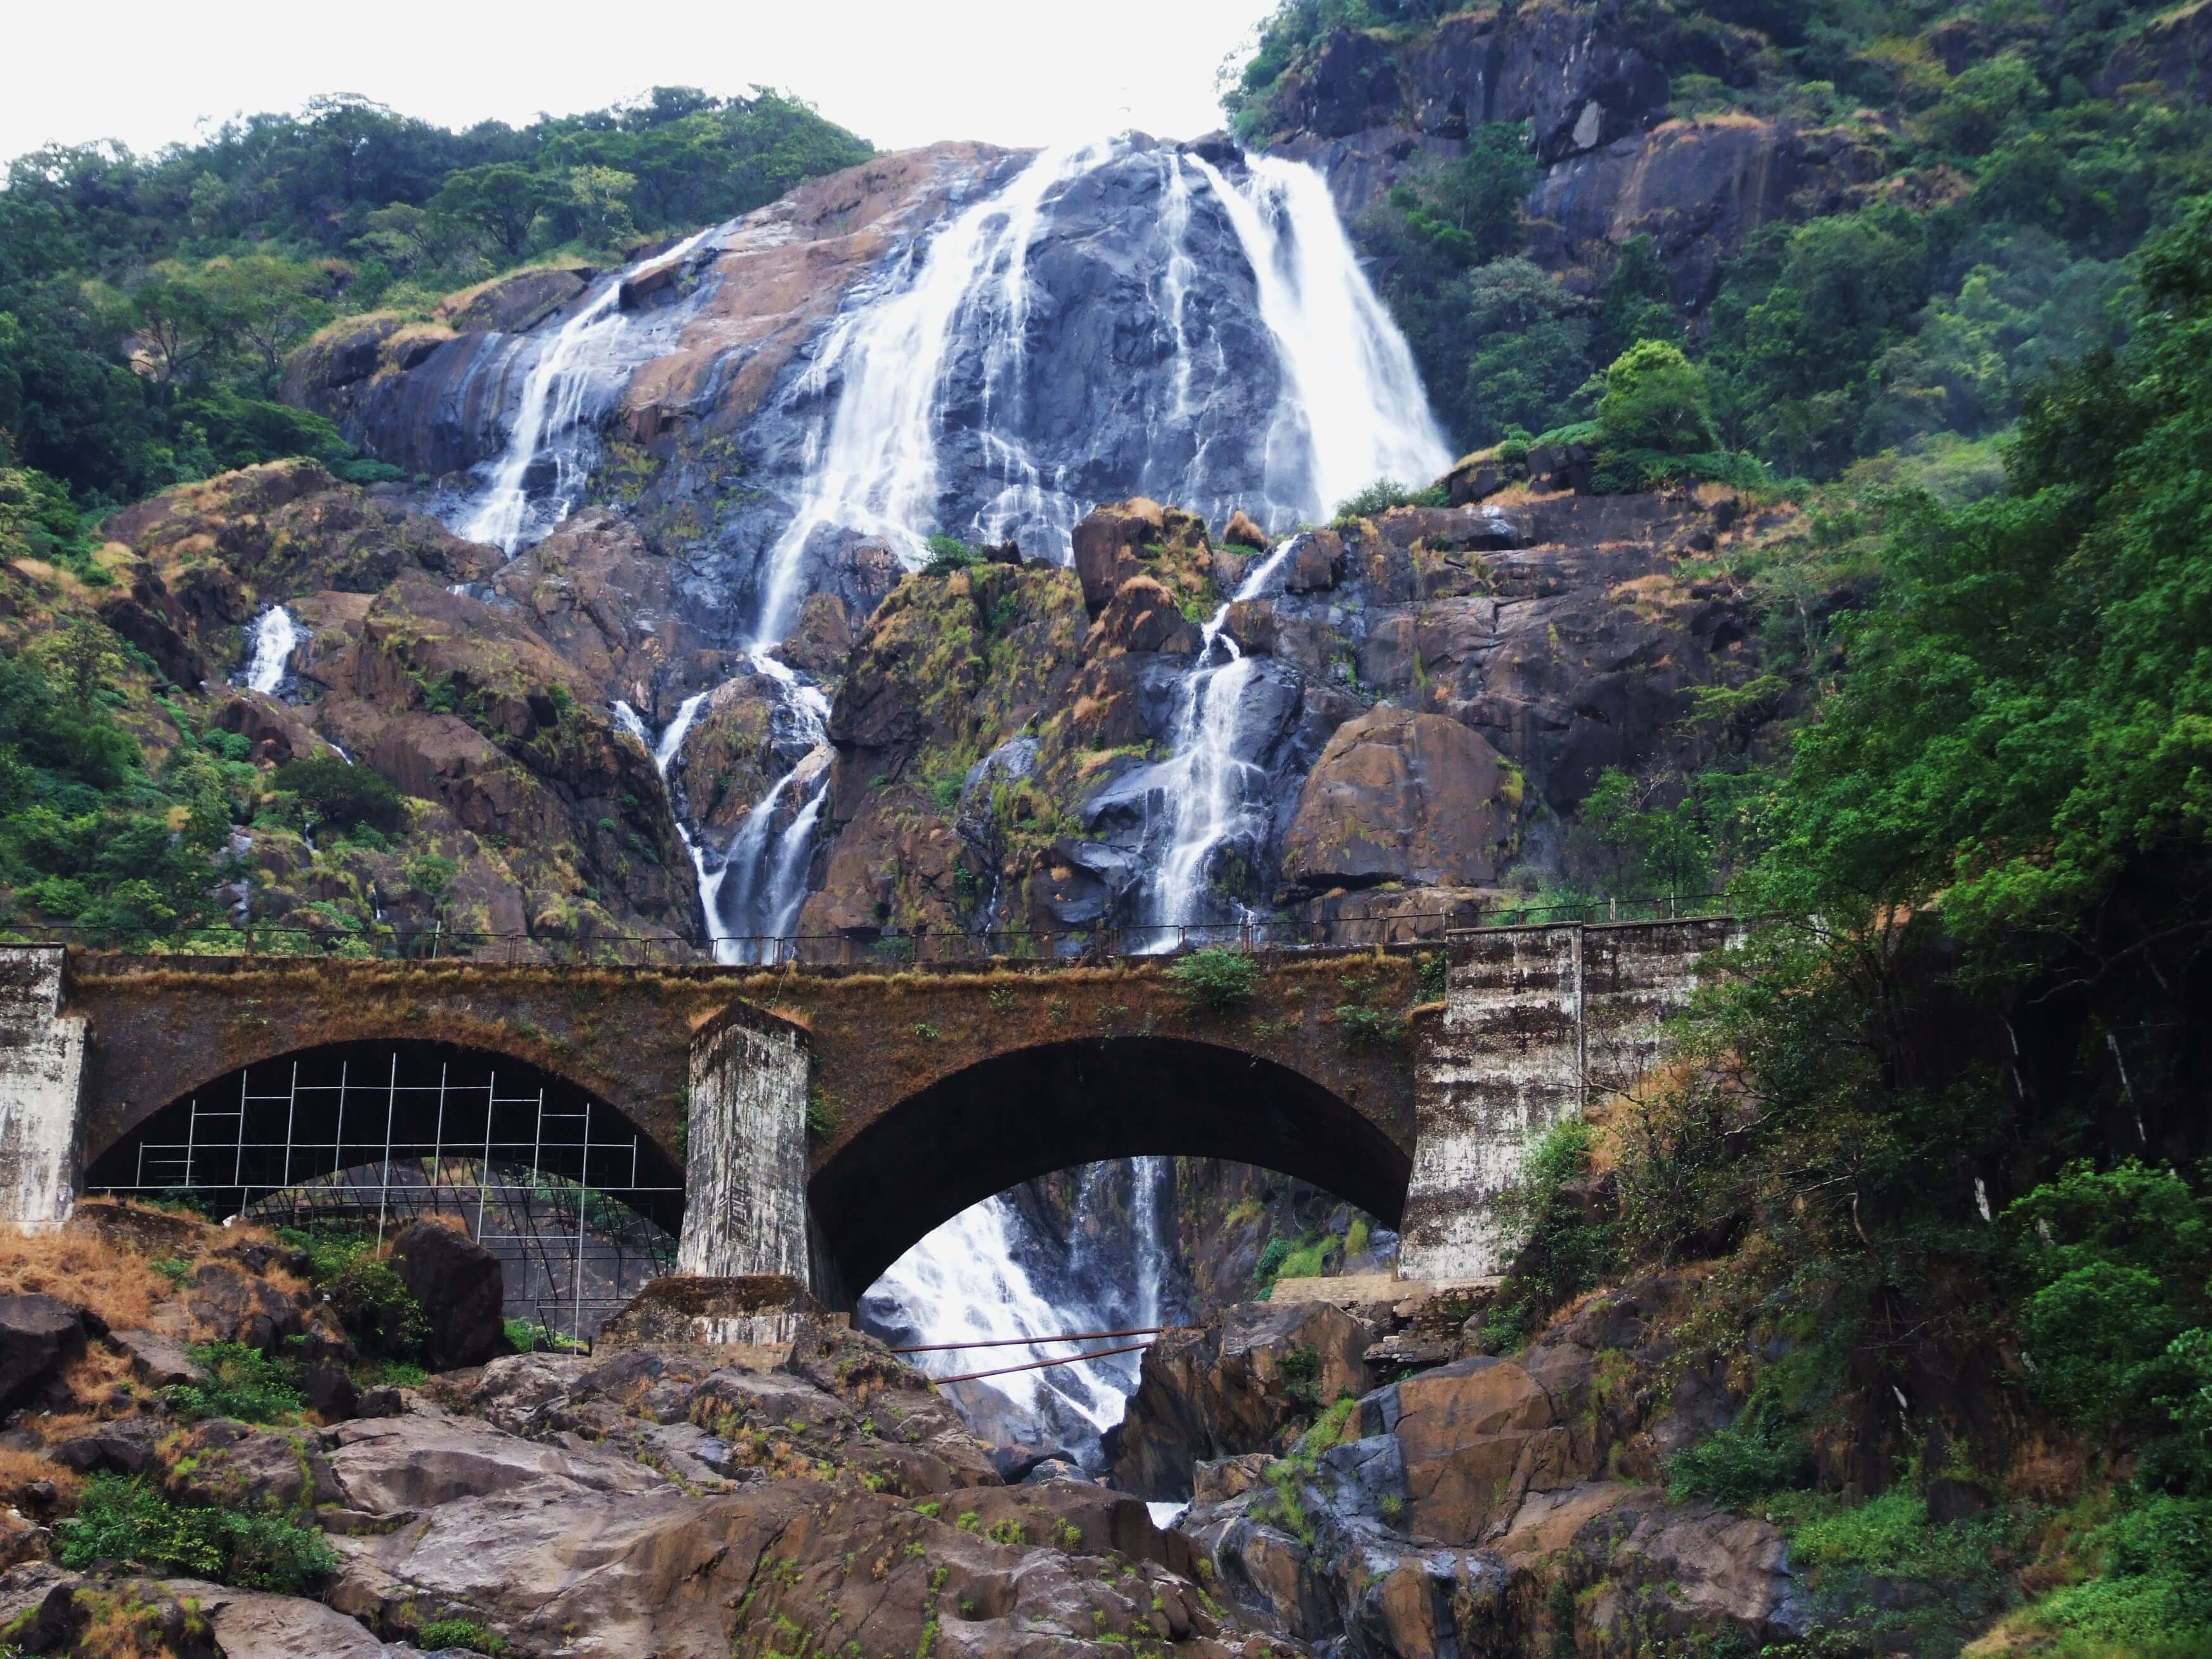 awsome-view-of-falls-dudhsagar-falls